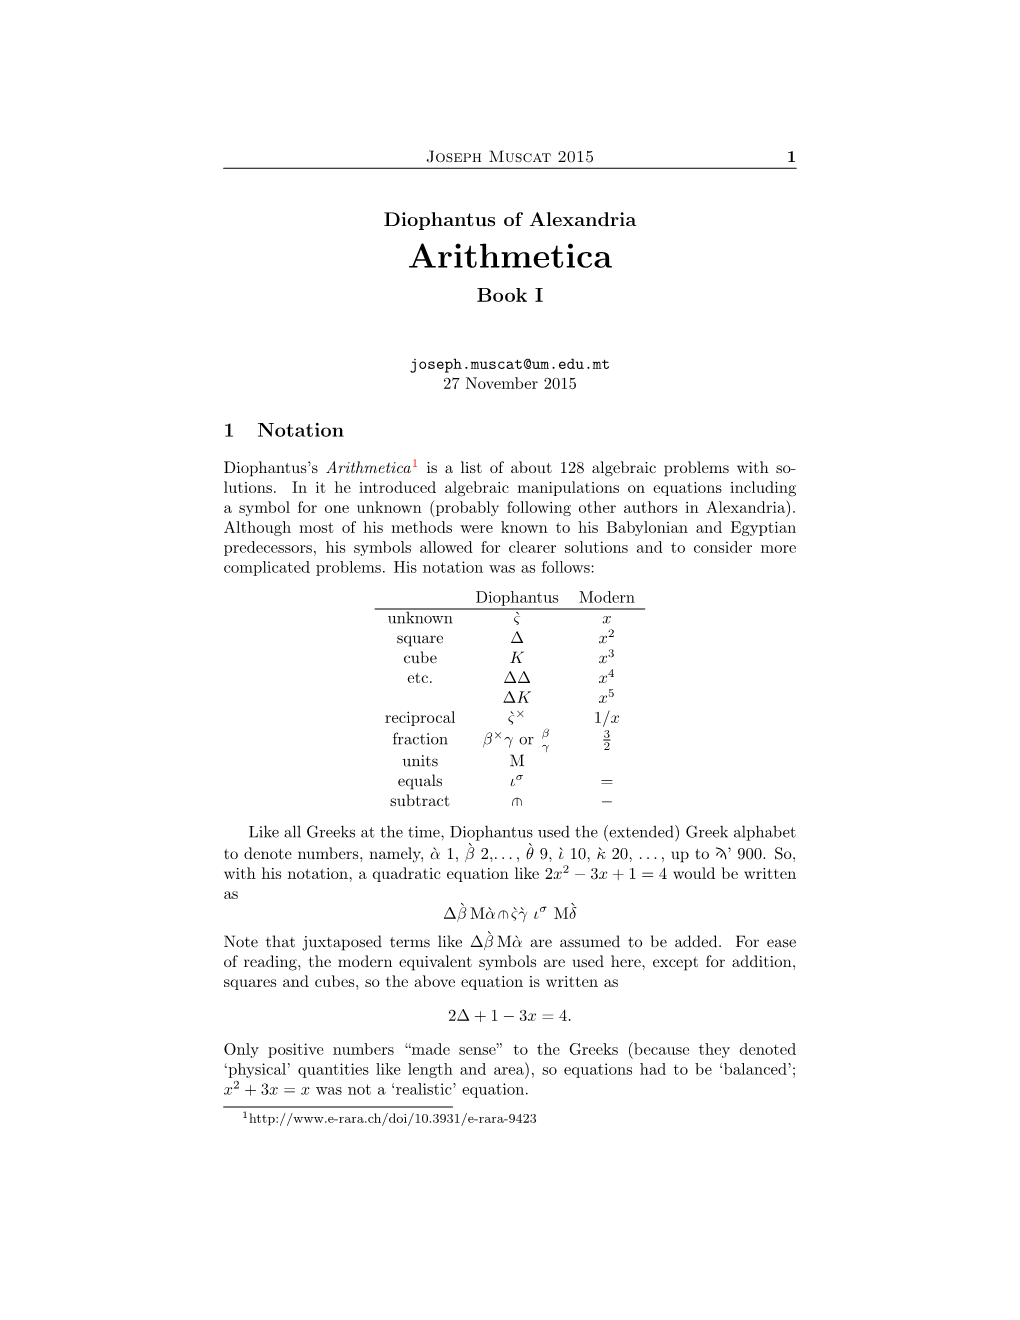 Arithmetica Book I